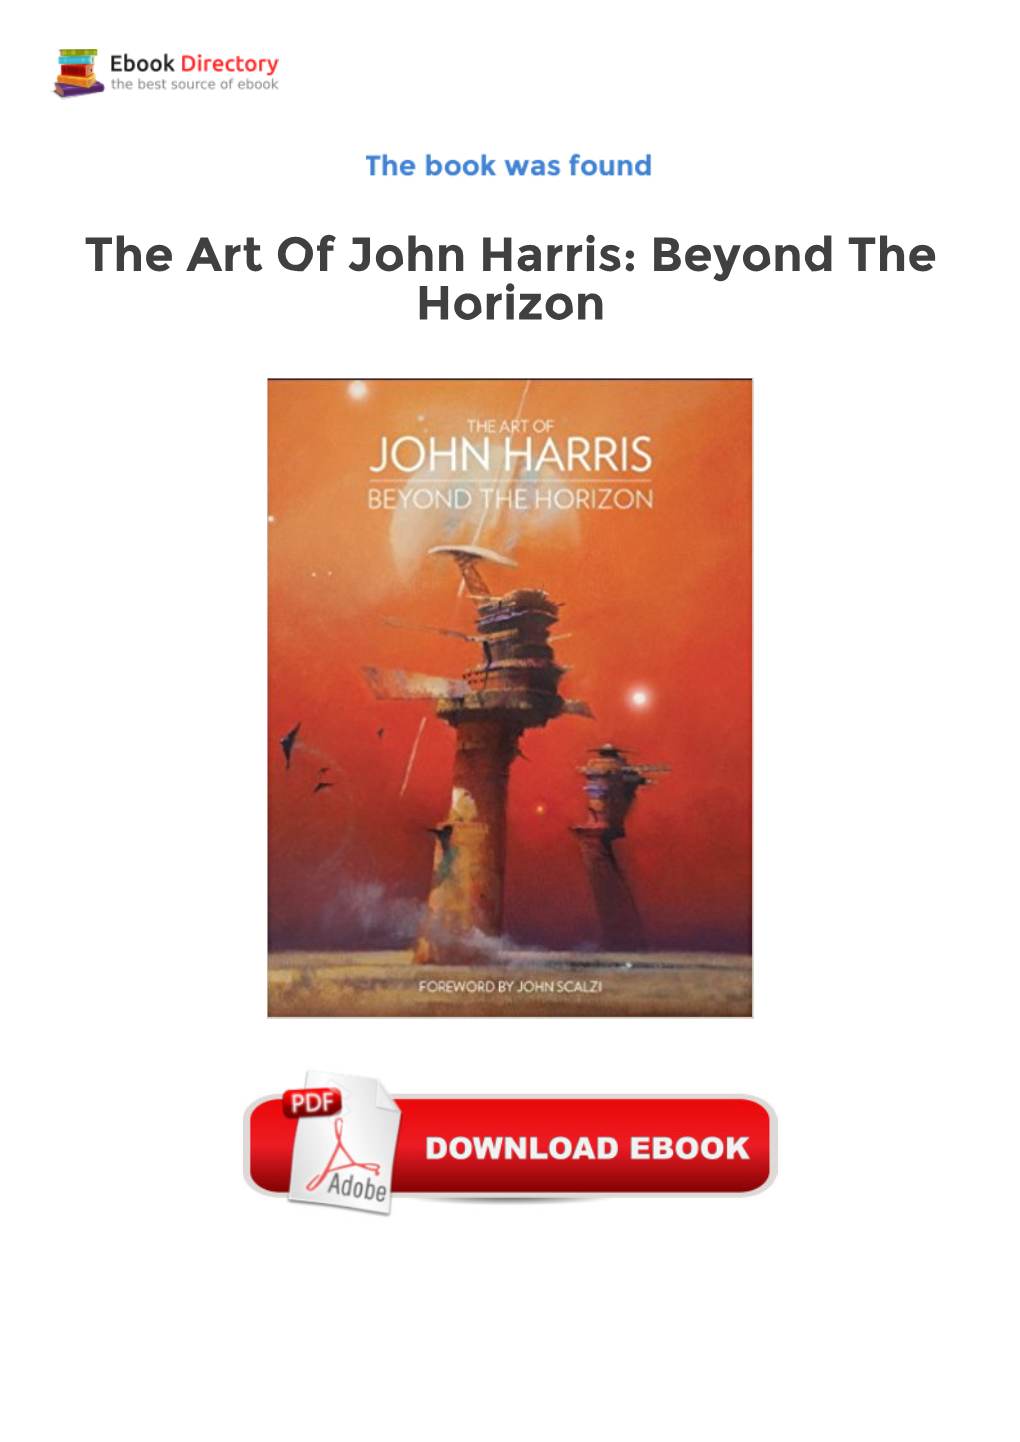 The Art of John Harris: Beyond the Horizon Download Free (EPUB, PDF)